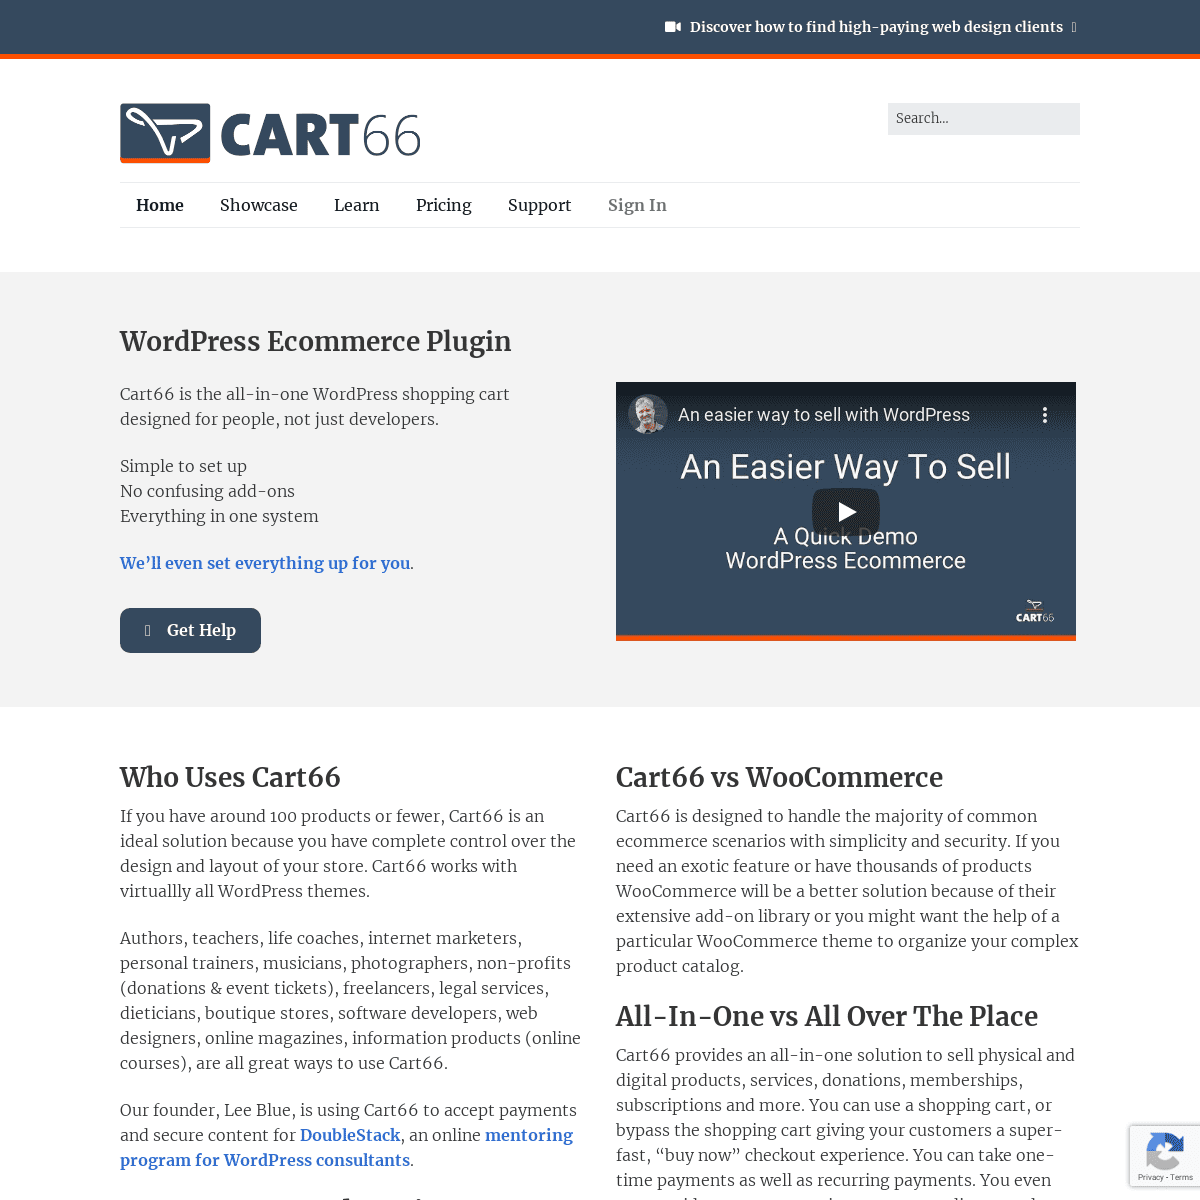 A complete backup of cart66.com